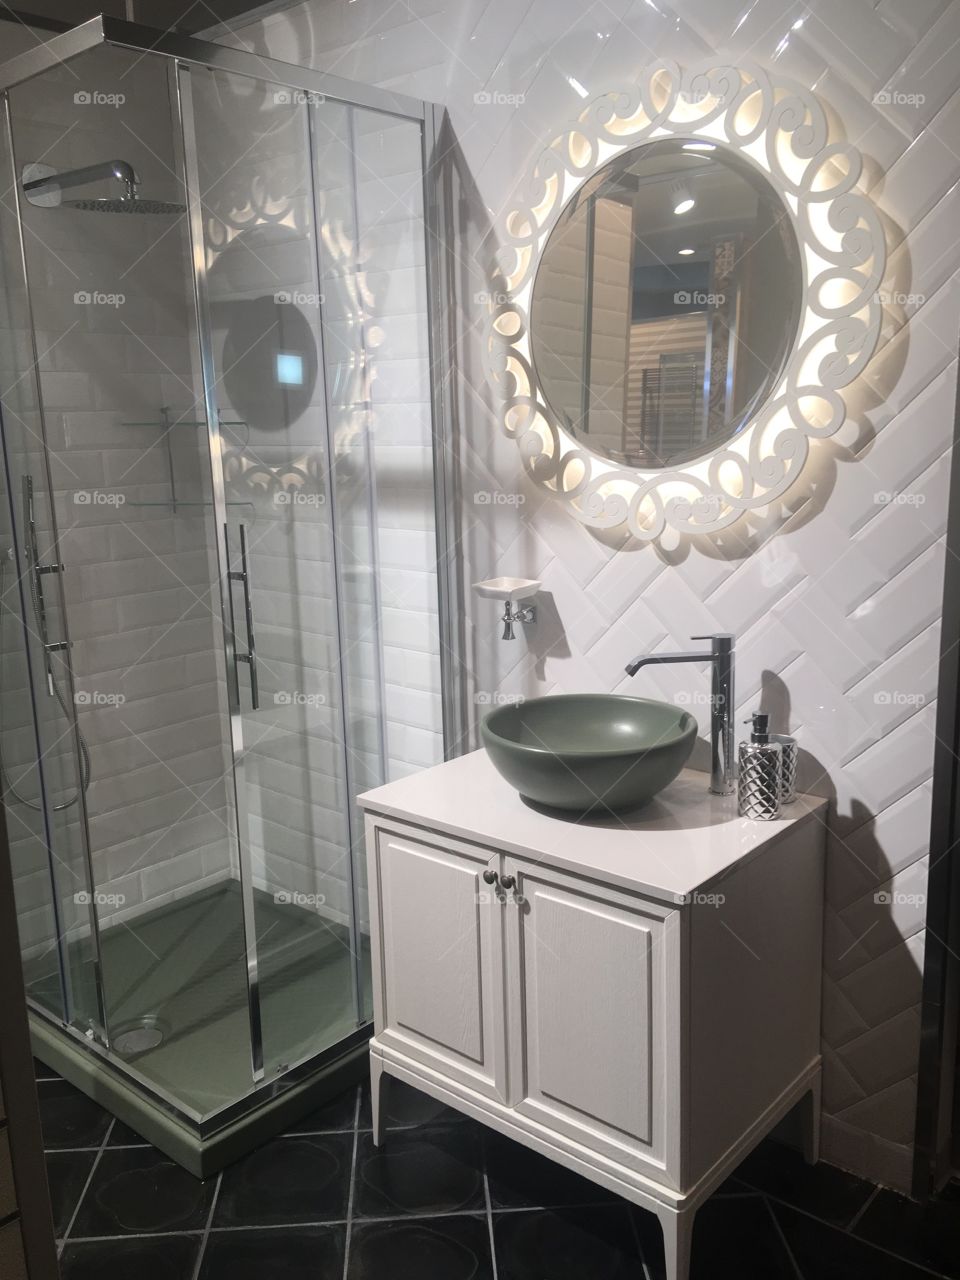 Bathroom sink basin shower stylish style classic white green new best mirror lights design 